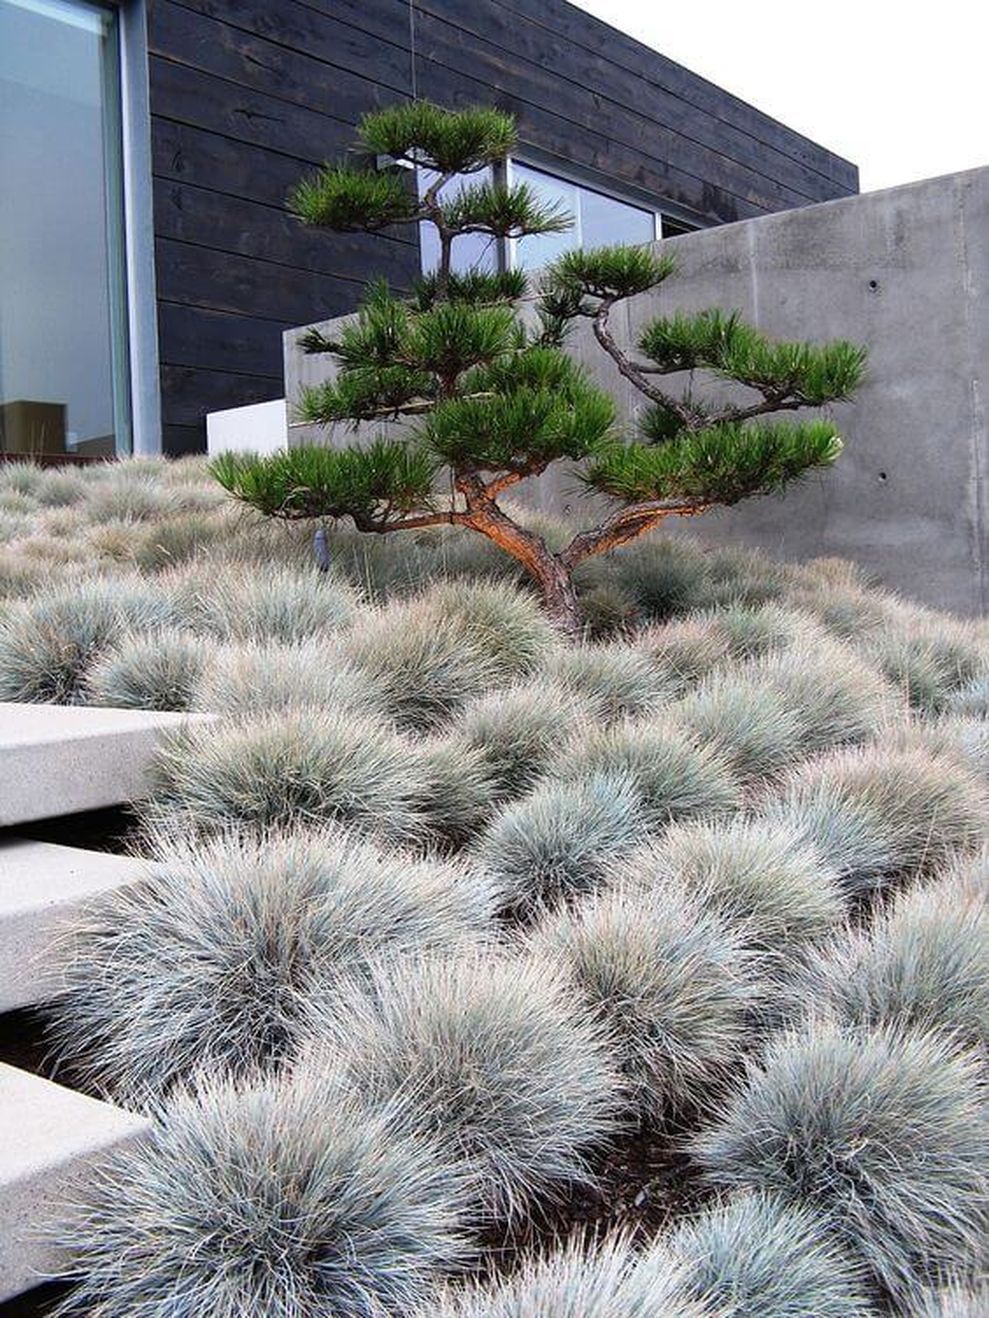 Creating Harmony: The Art of Japanese Garden Design